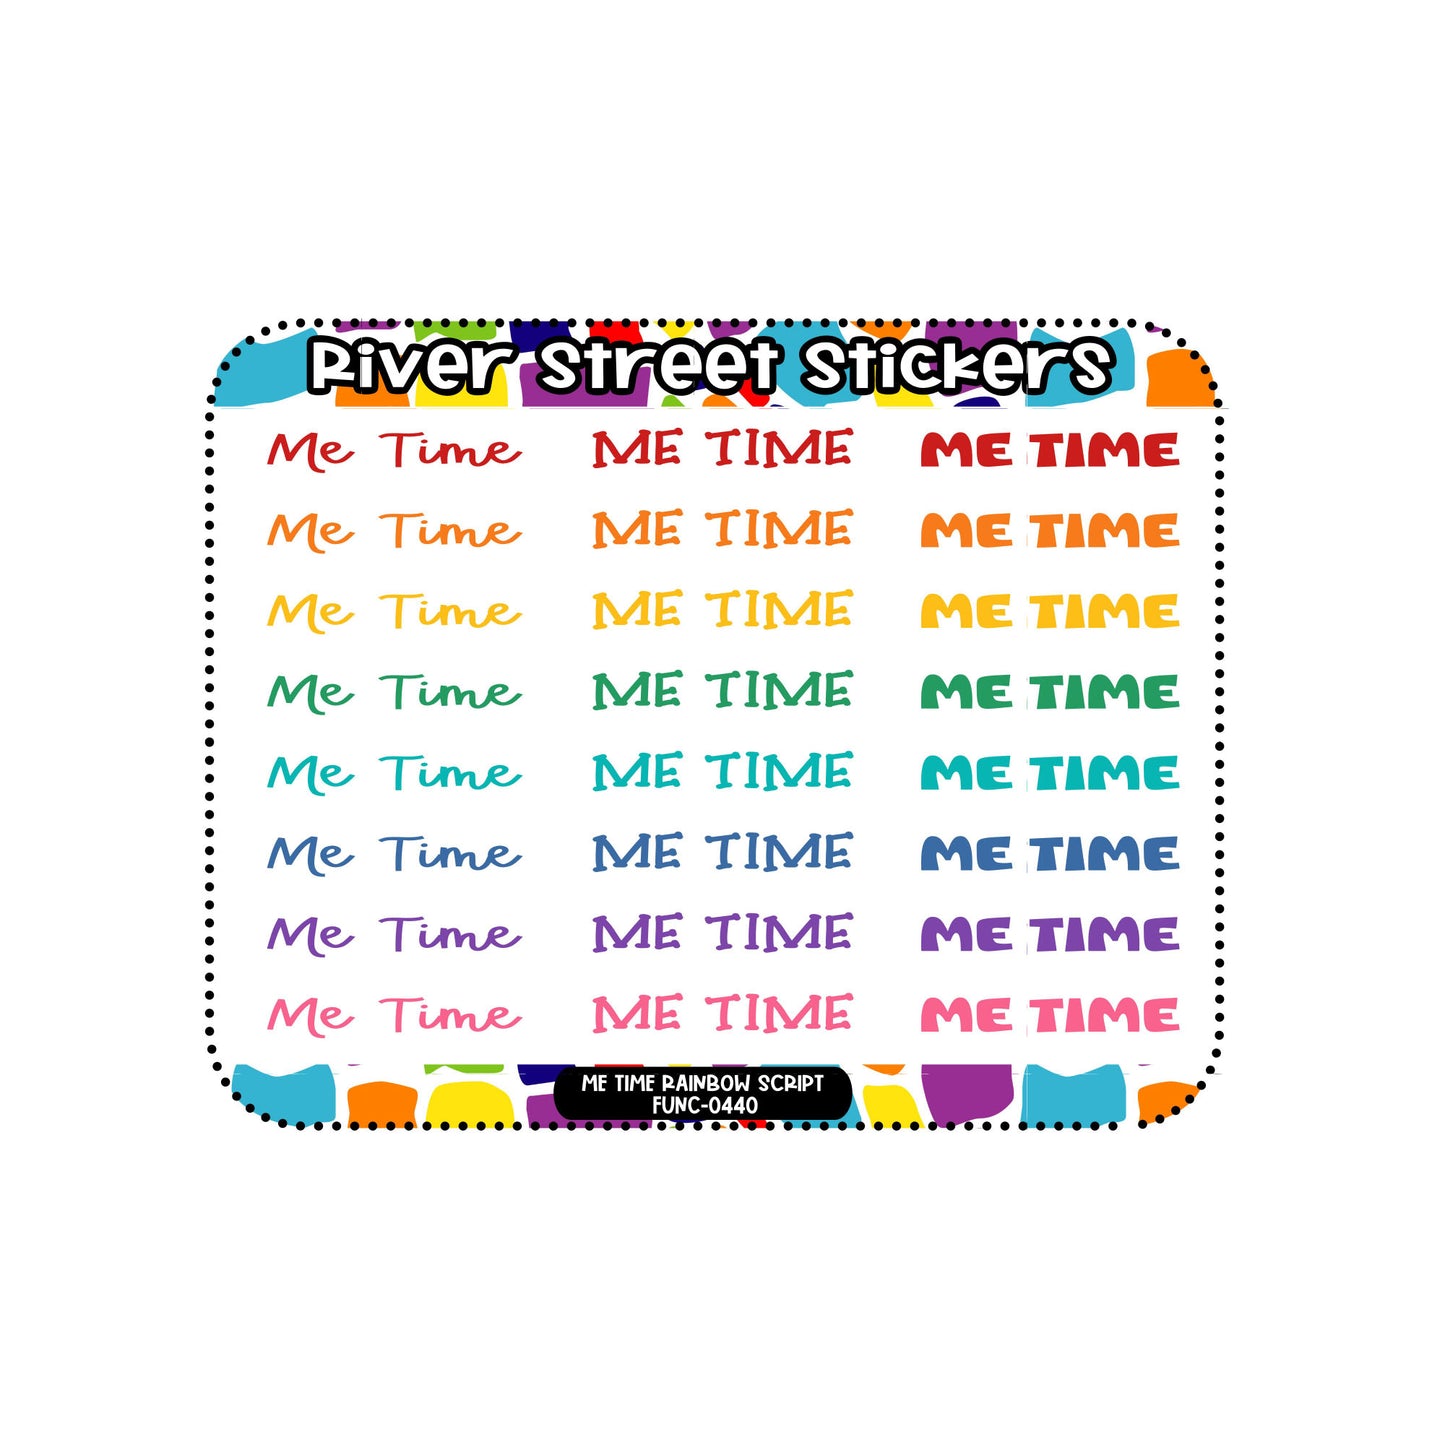 Me Time Rainbow Scripts